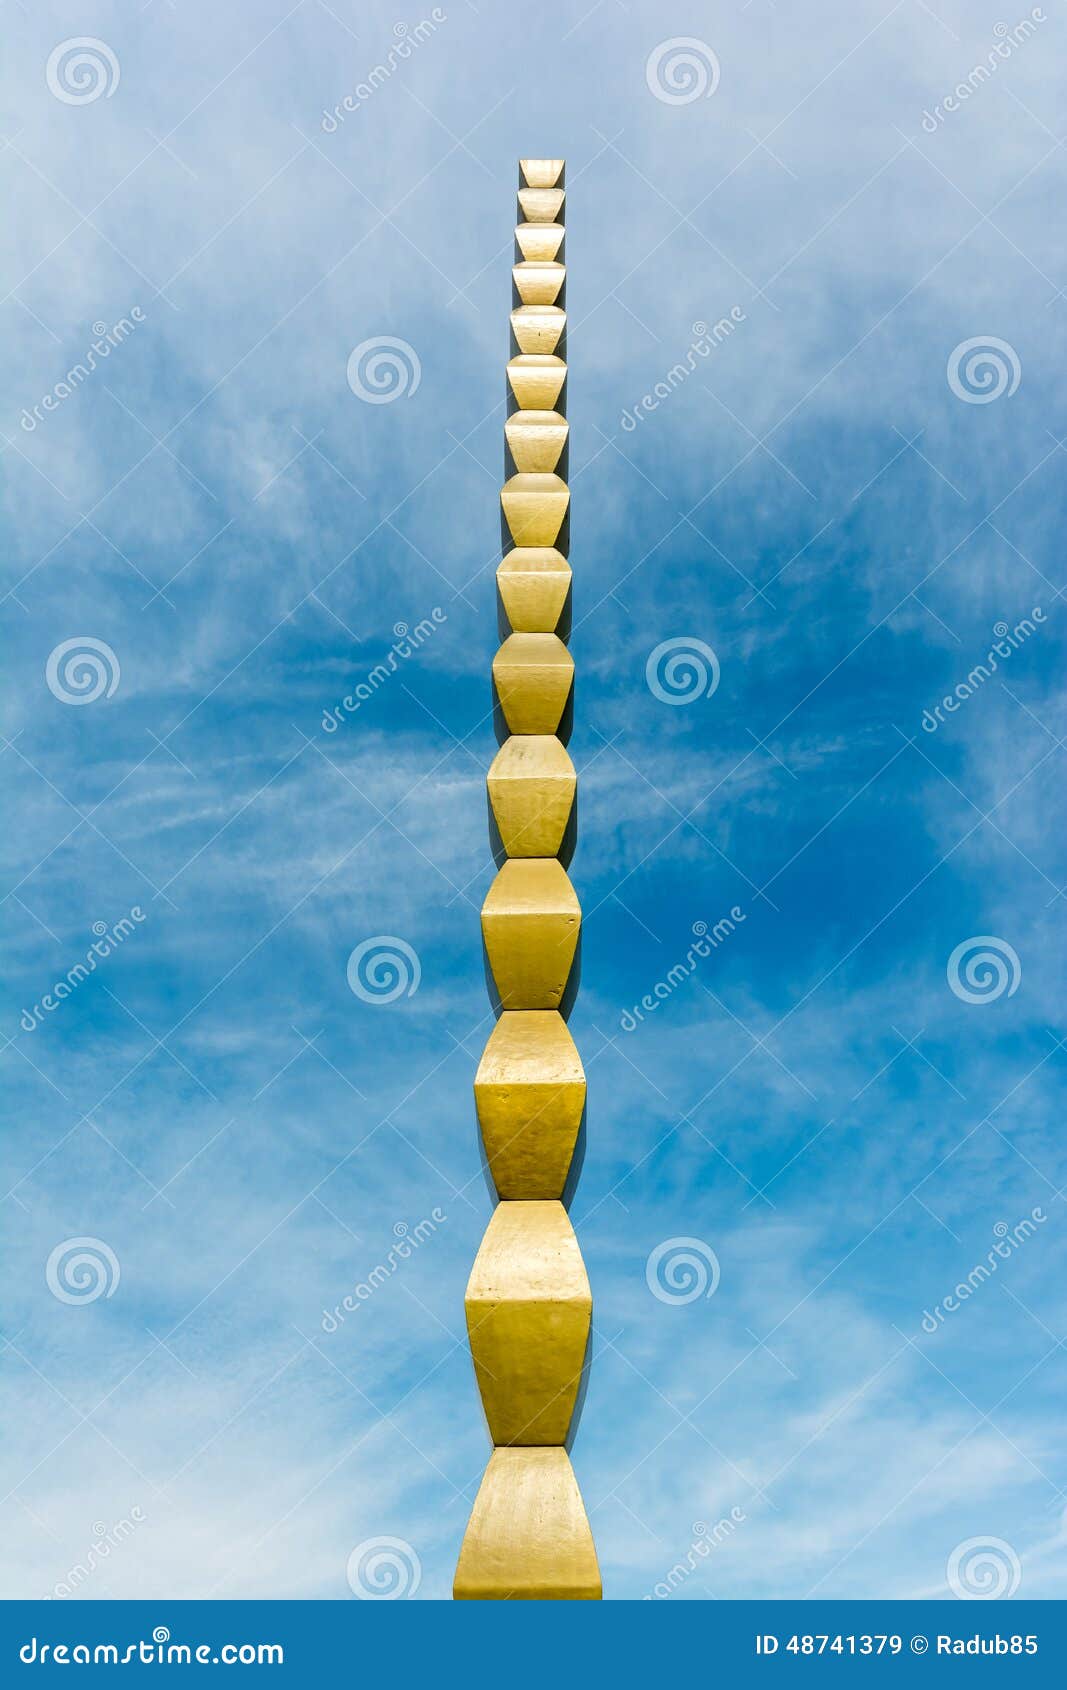 Image result for coloana infinitului